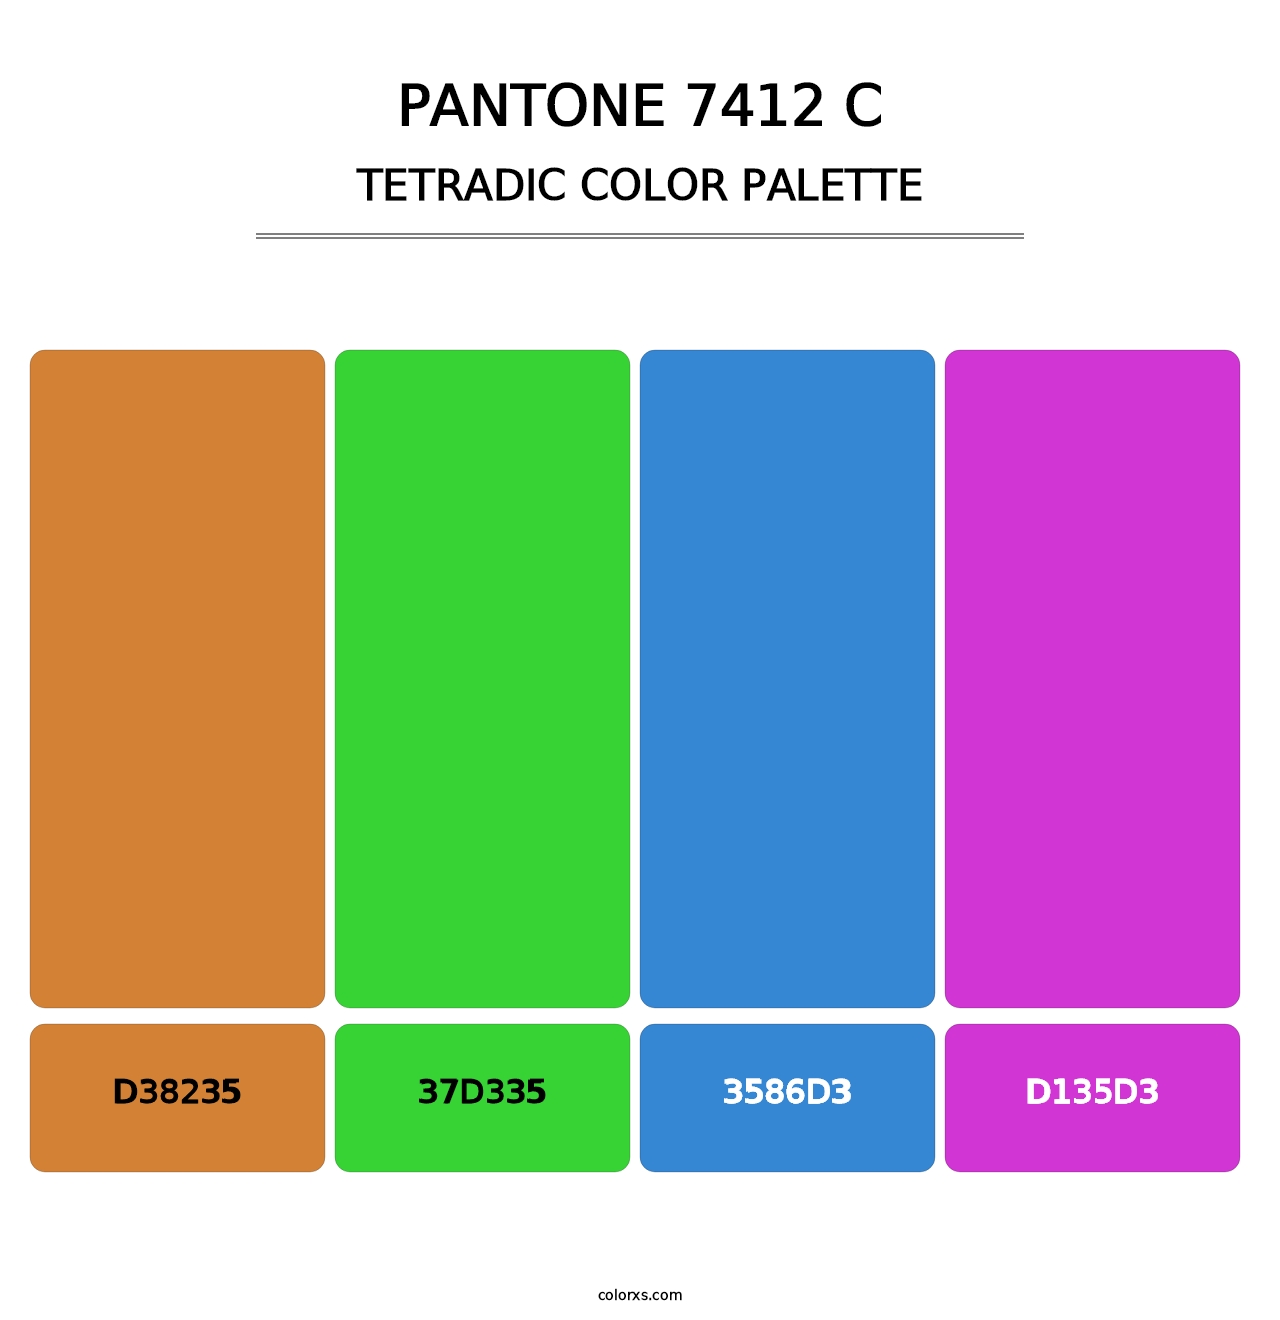 PANTONE 7412 C - Tetradic Color Palette